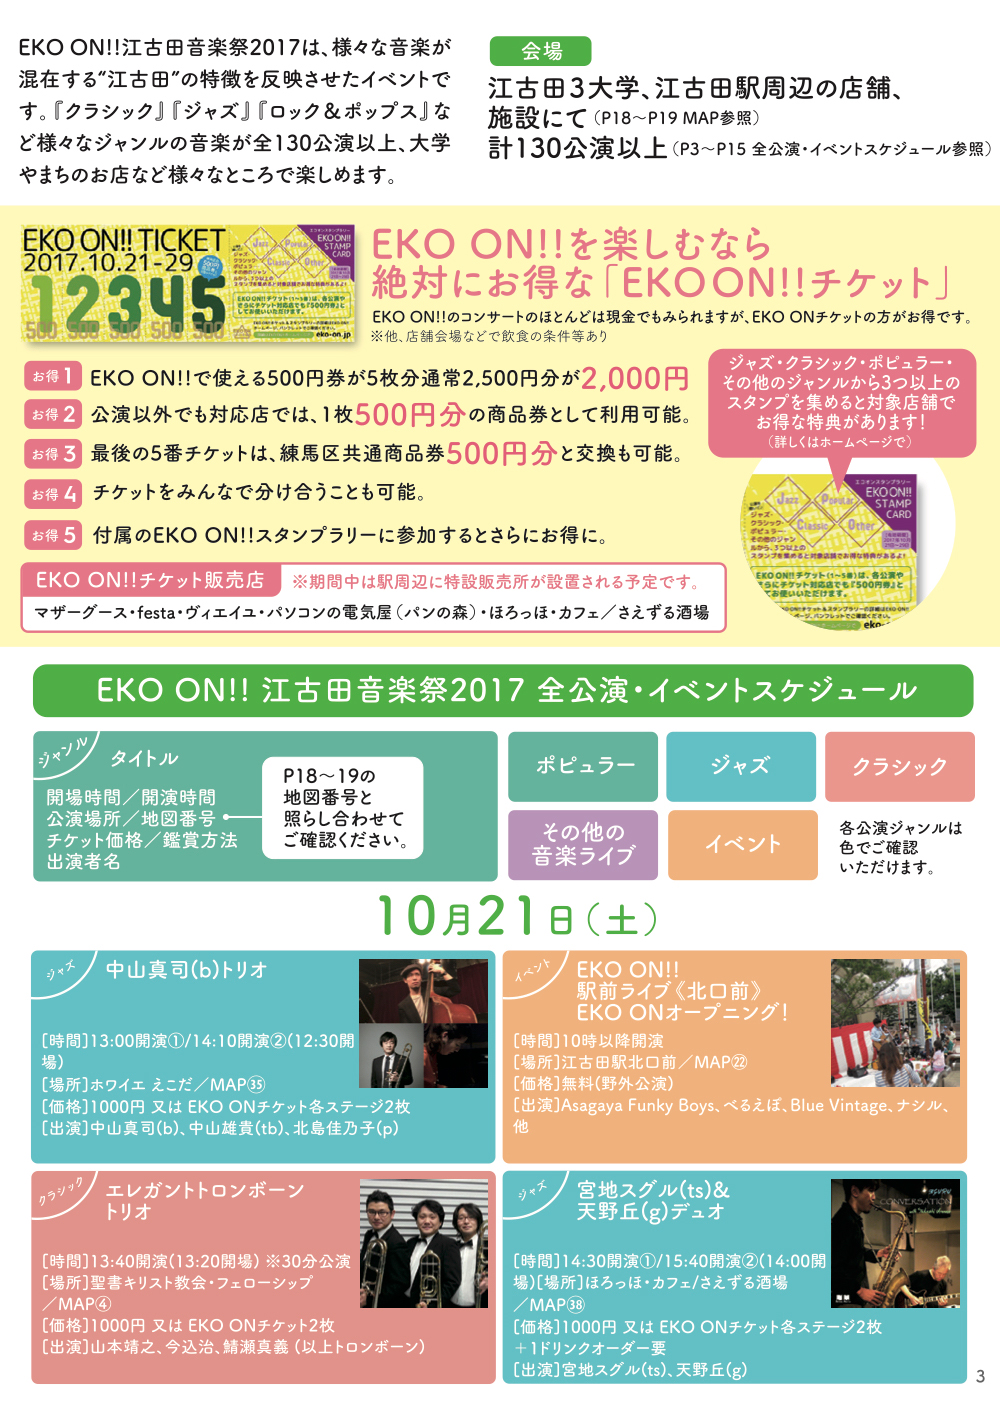 EKO ON江古田音楽祭2017の全体公演パンフレット③